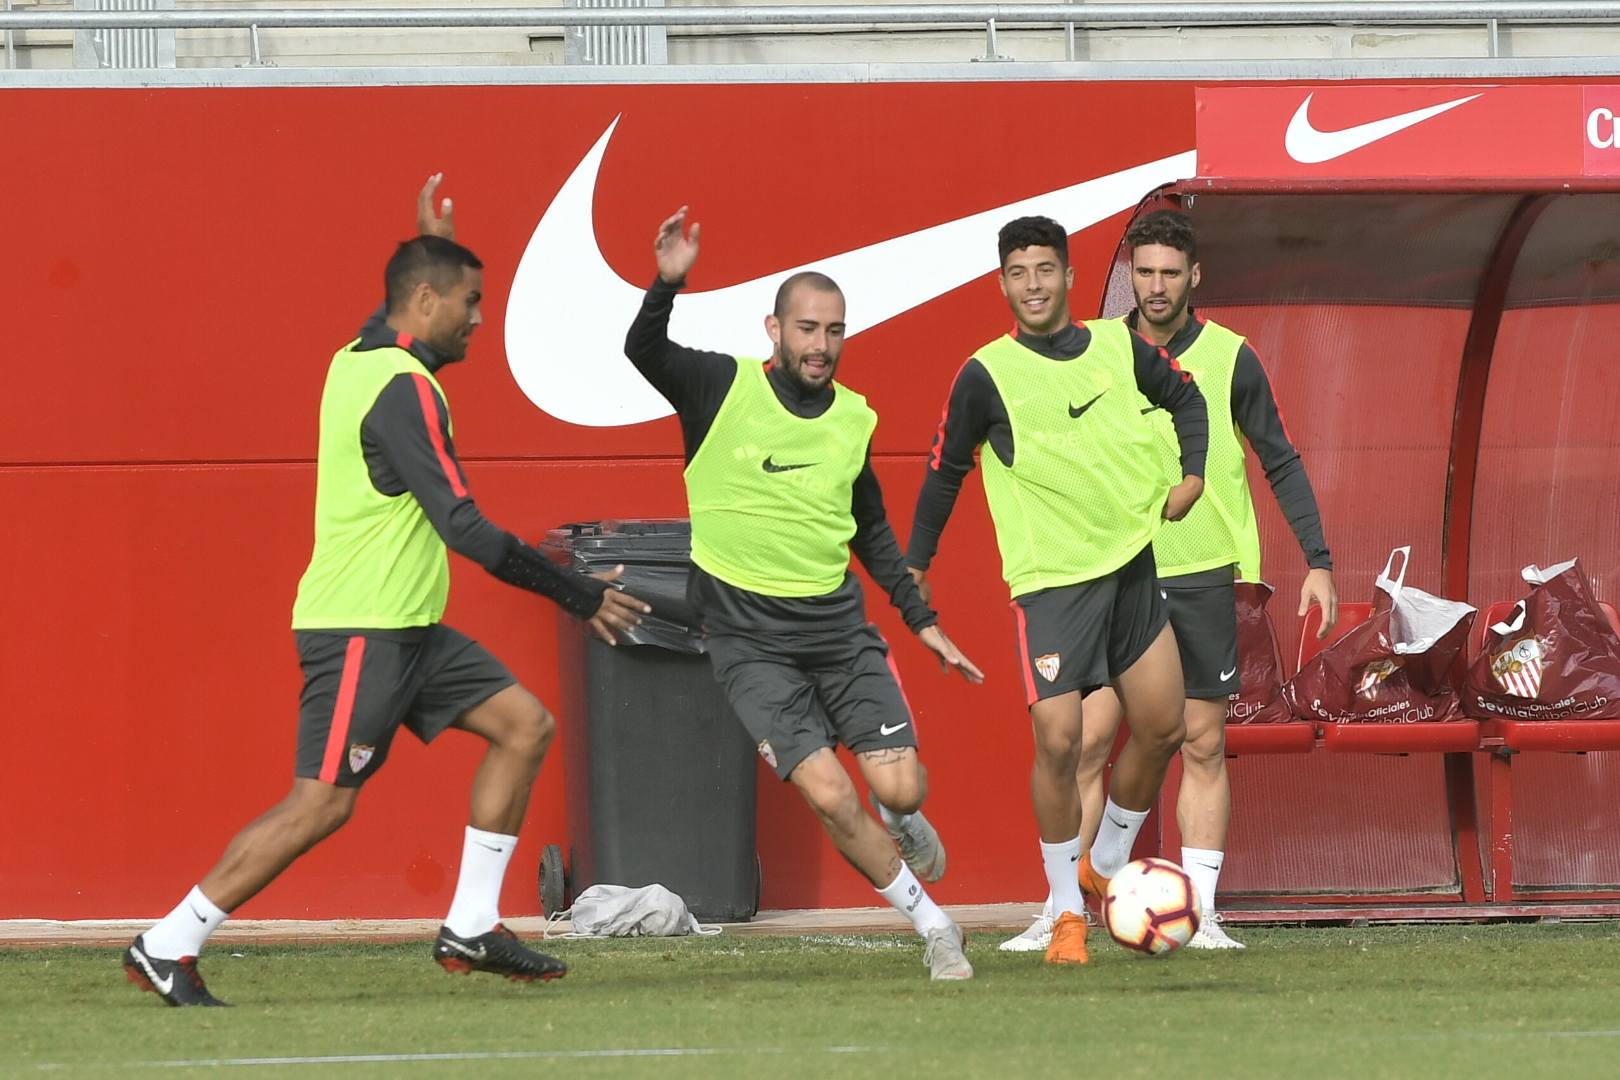 Sevilla FC's training session